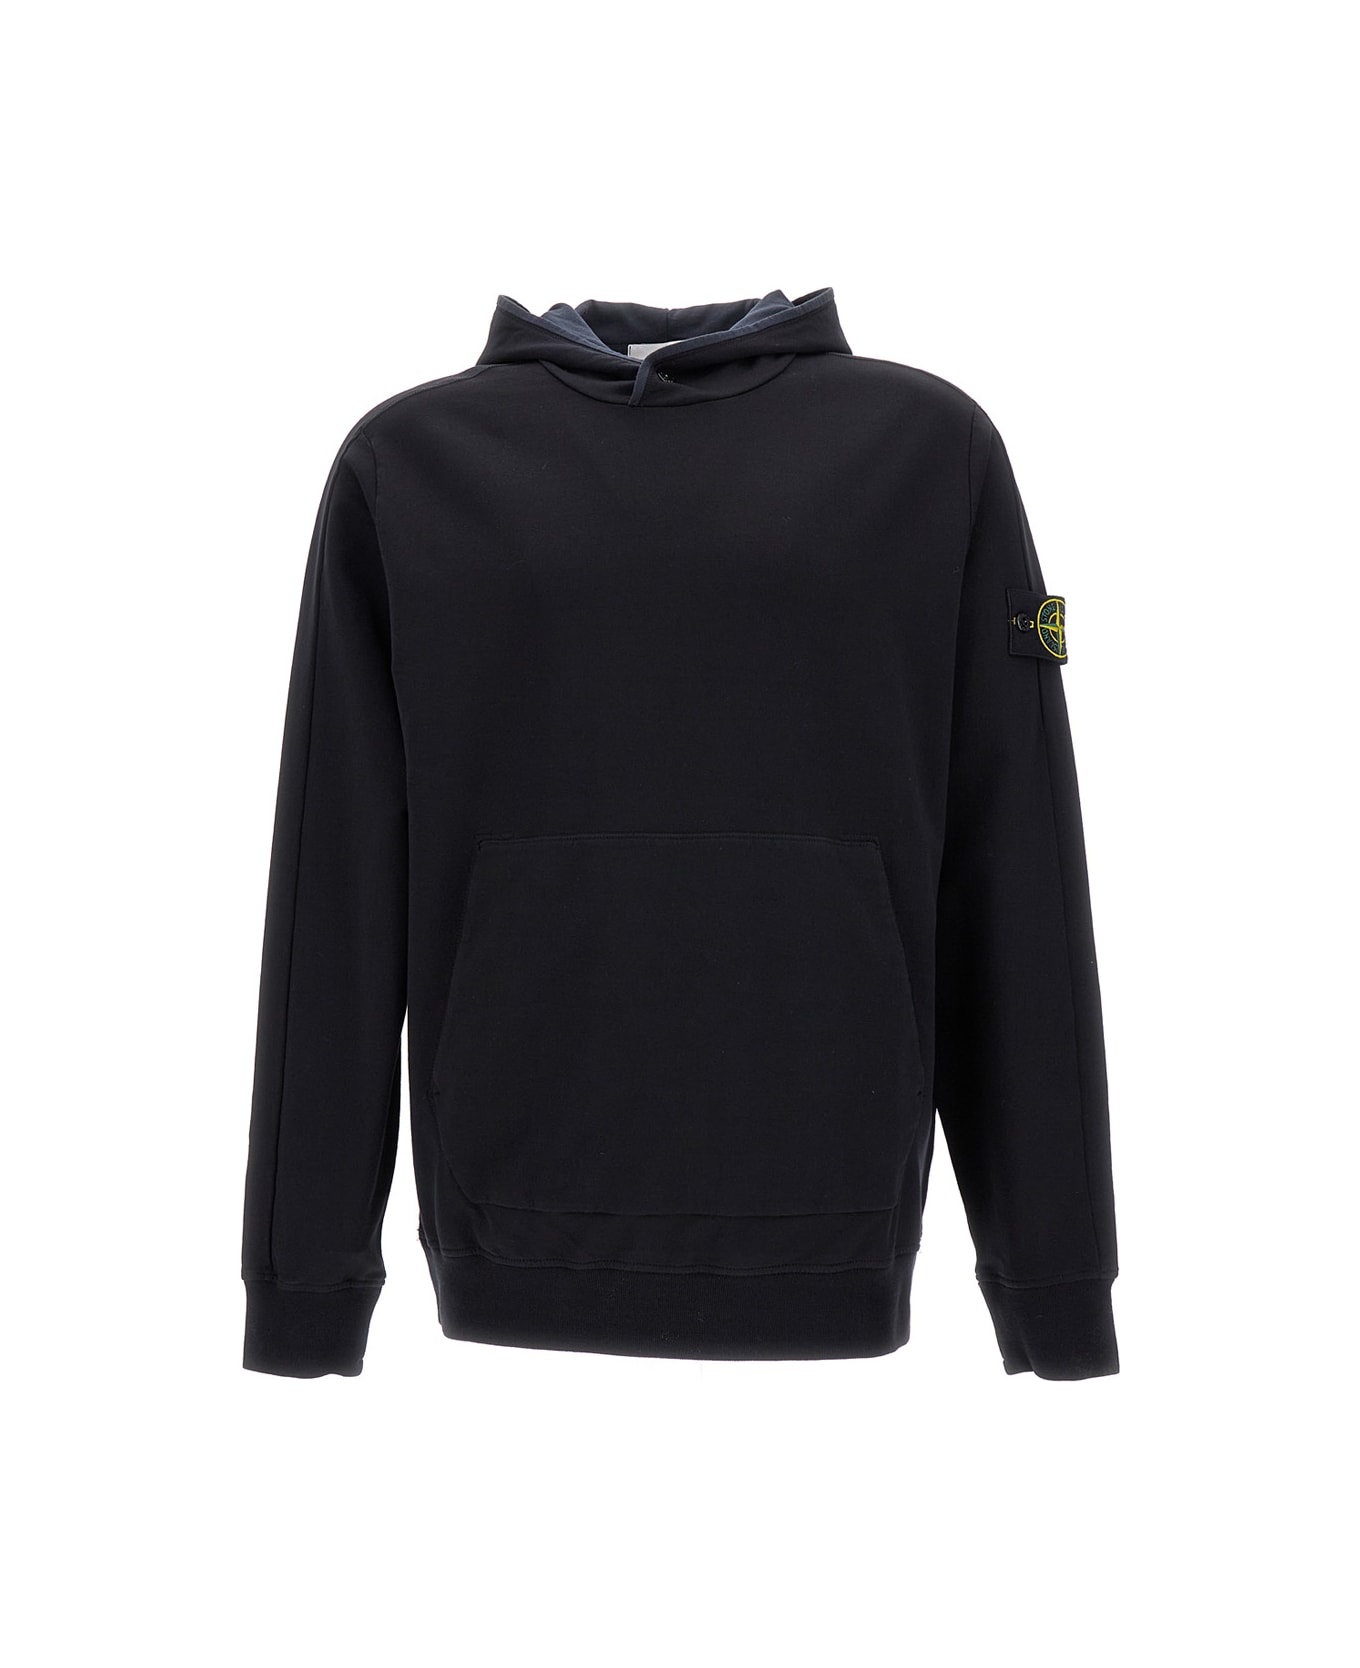 Stone Island Black Hooded Sweatshirt With Logo Application On Sleeve In Cotton Blend Man - Black フリース